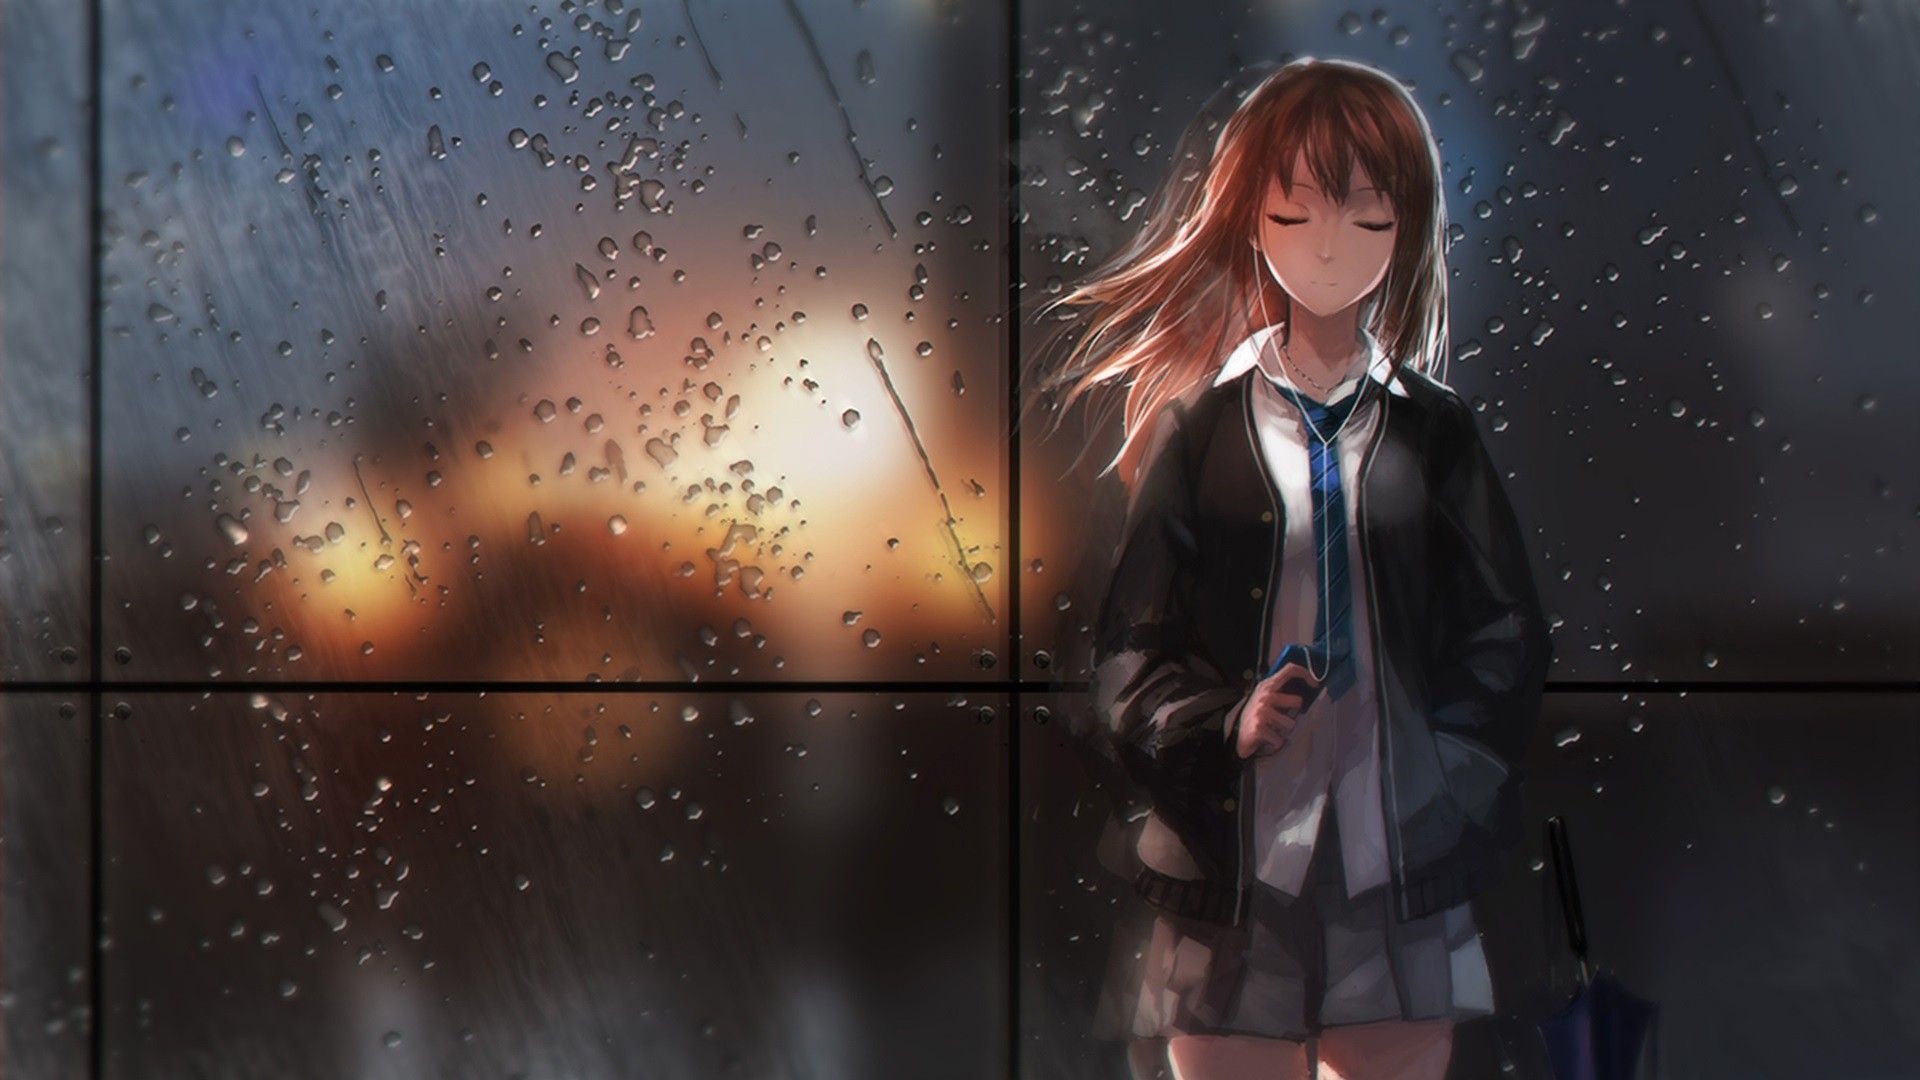 Mist Rain Anime Wallpaper. Steampunk